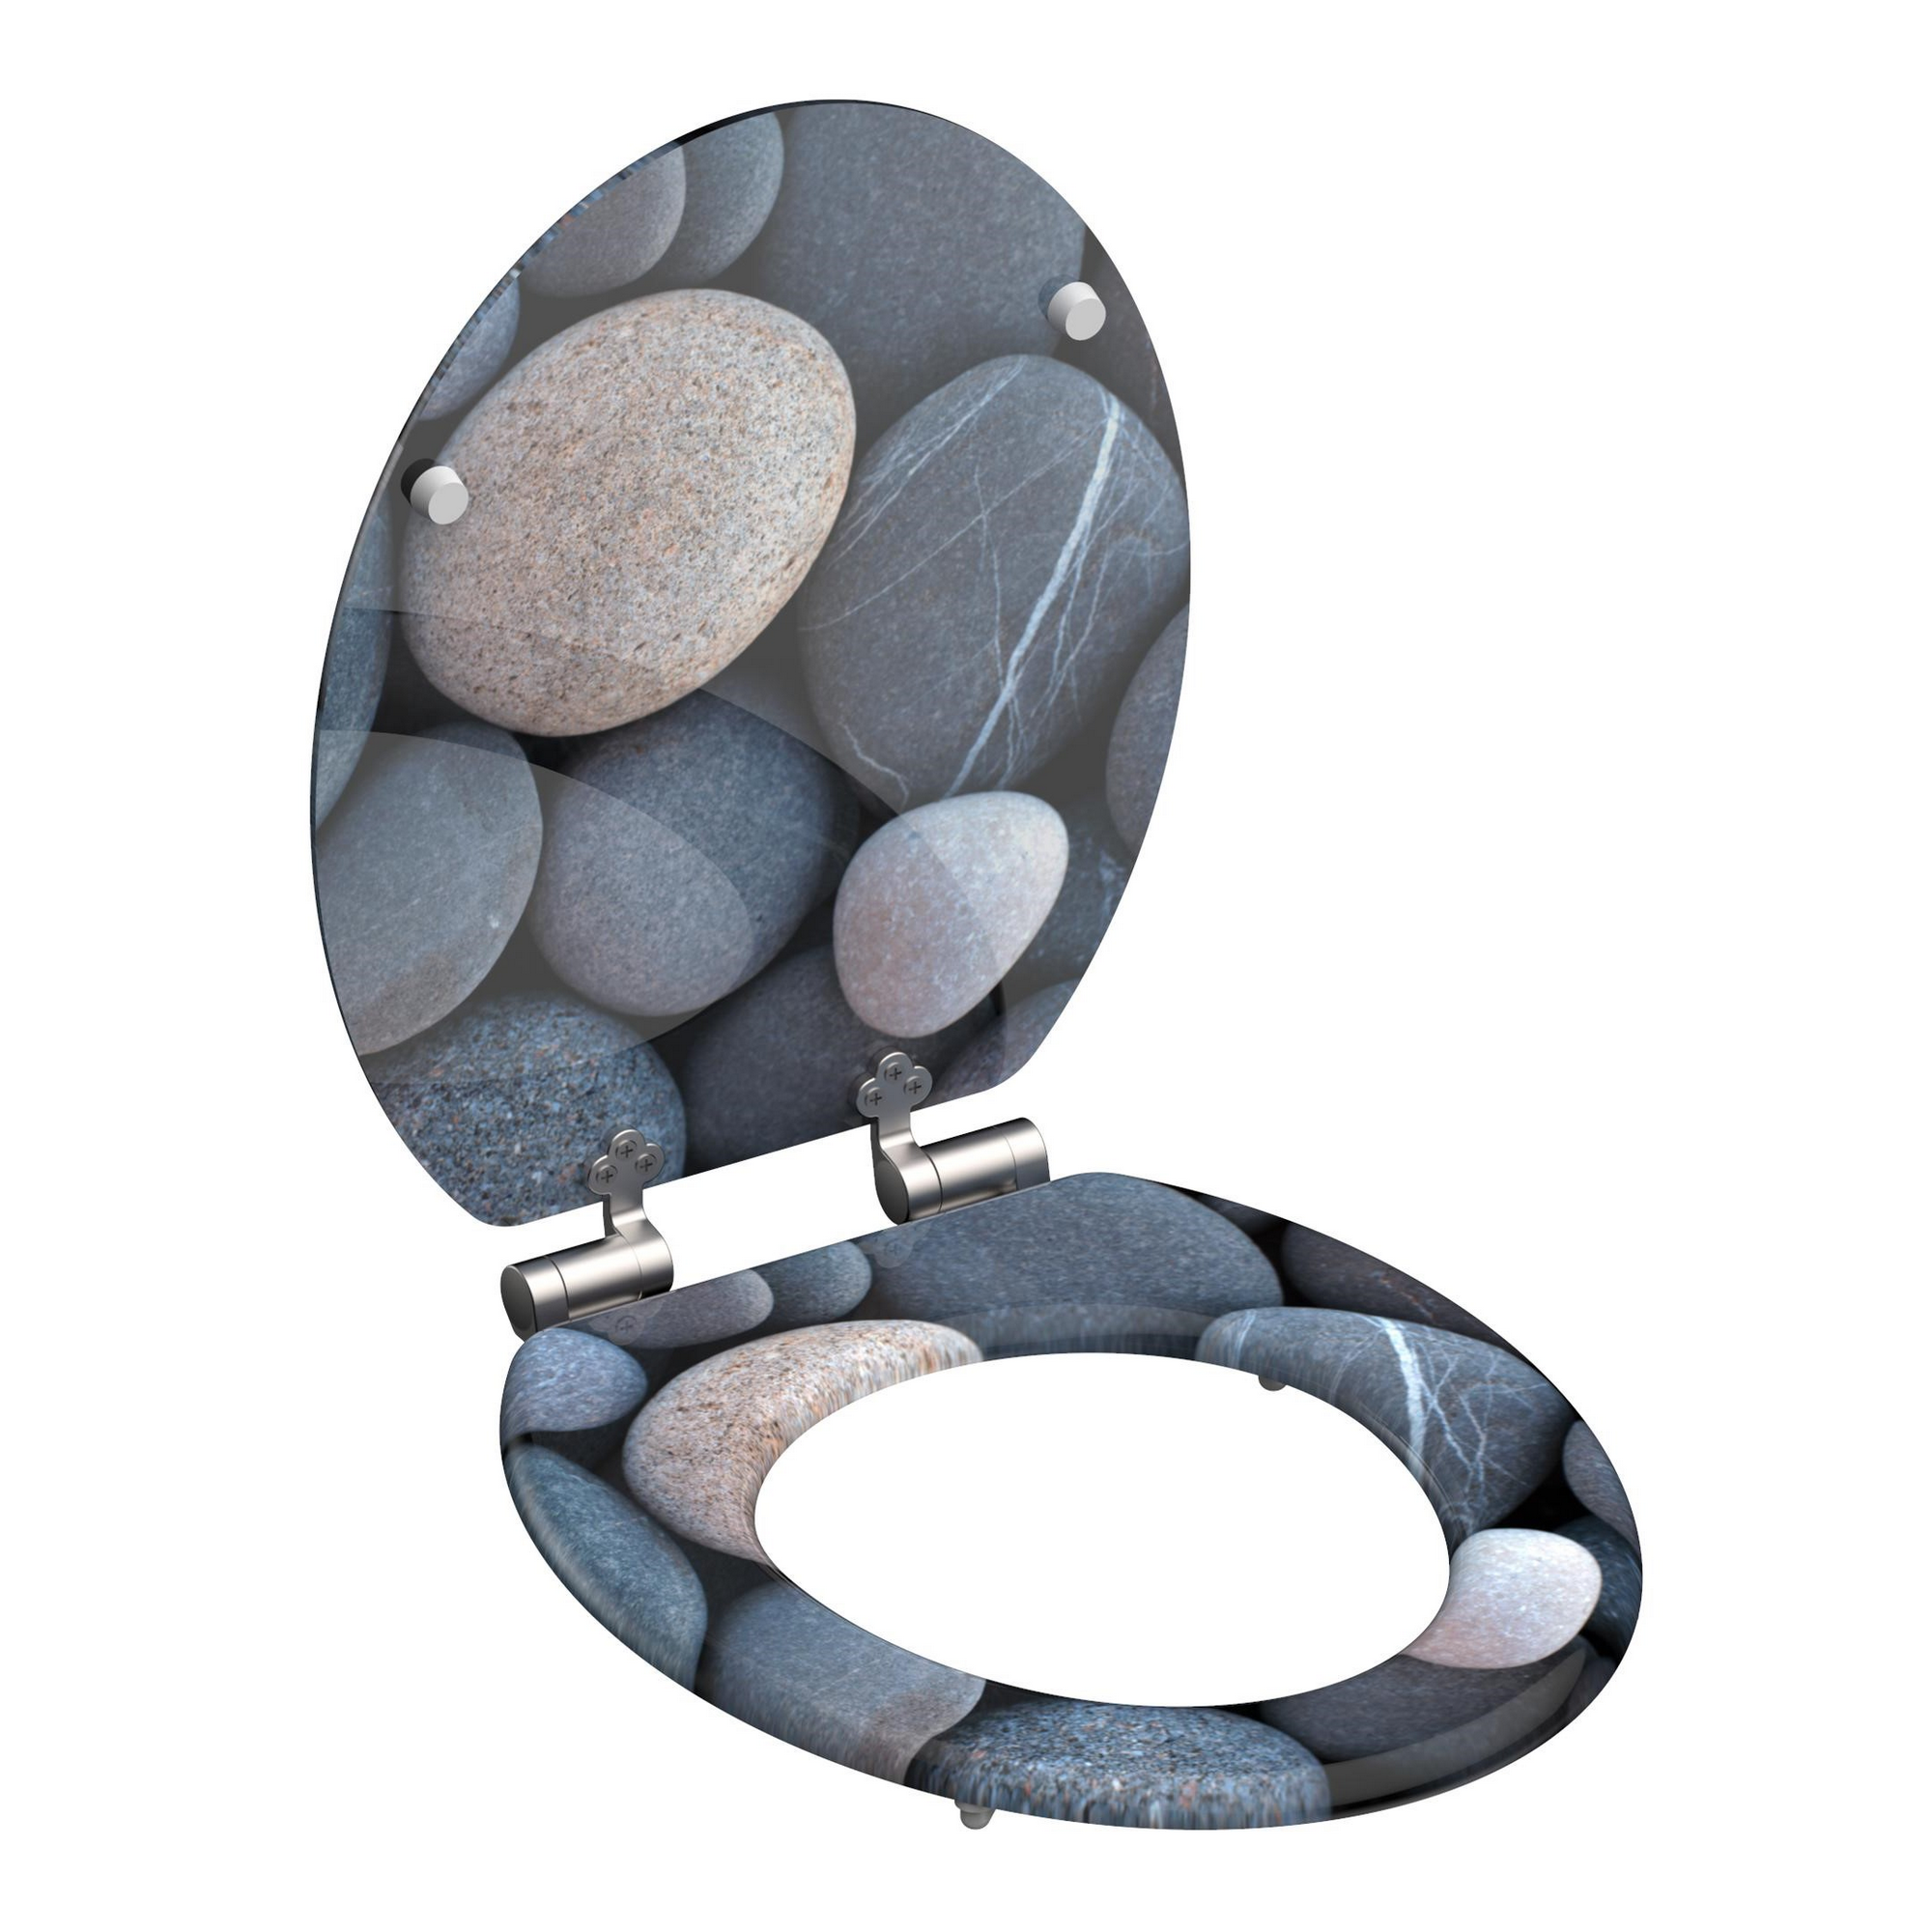 WC-Sitz 'Grey Stones' mit Absenkautomatik grau 37,5 x 43,5 cm + product picture